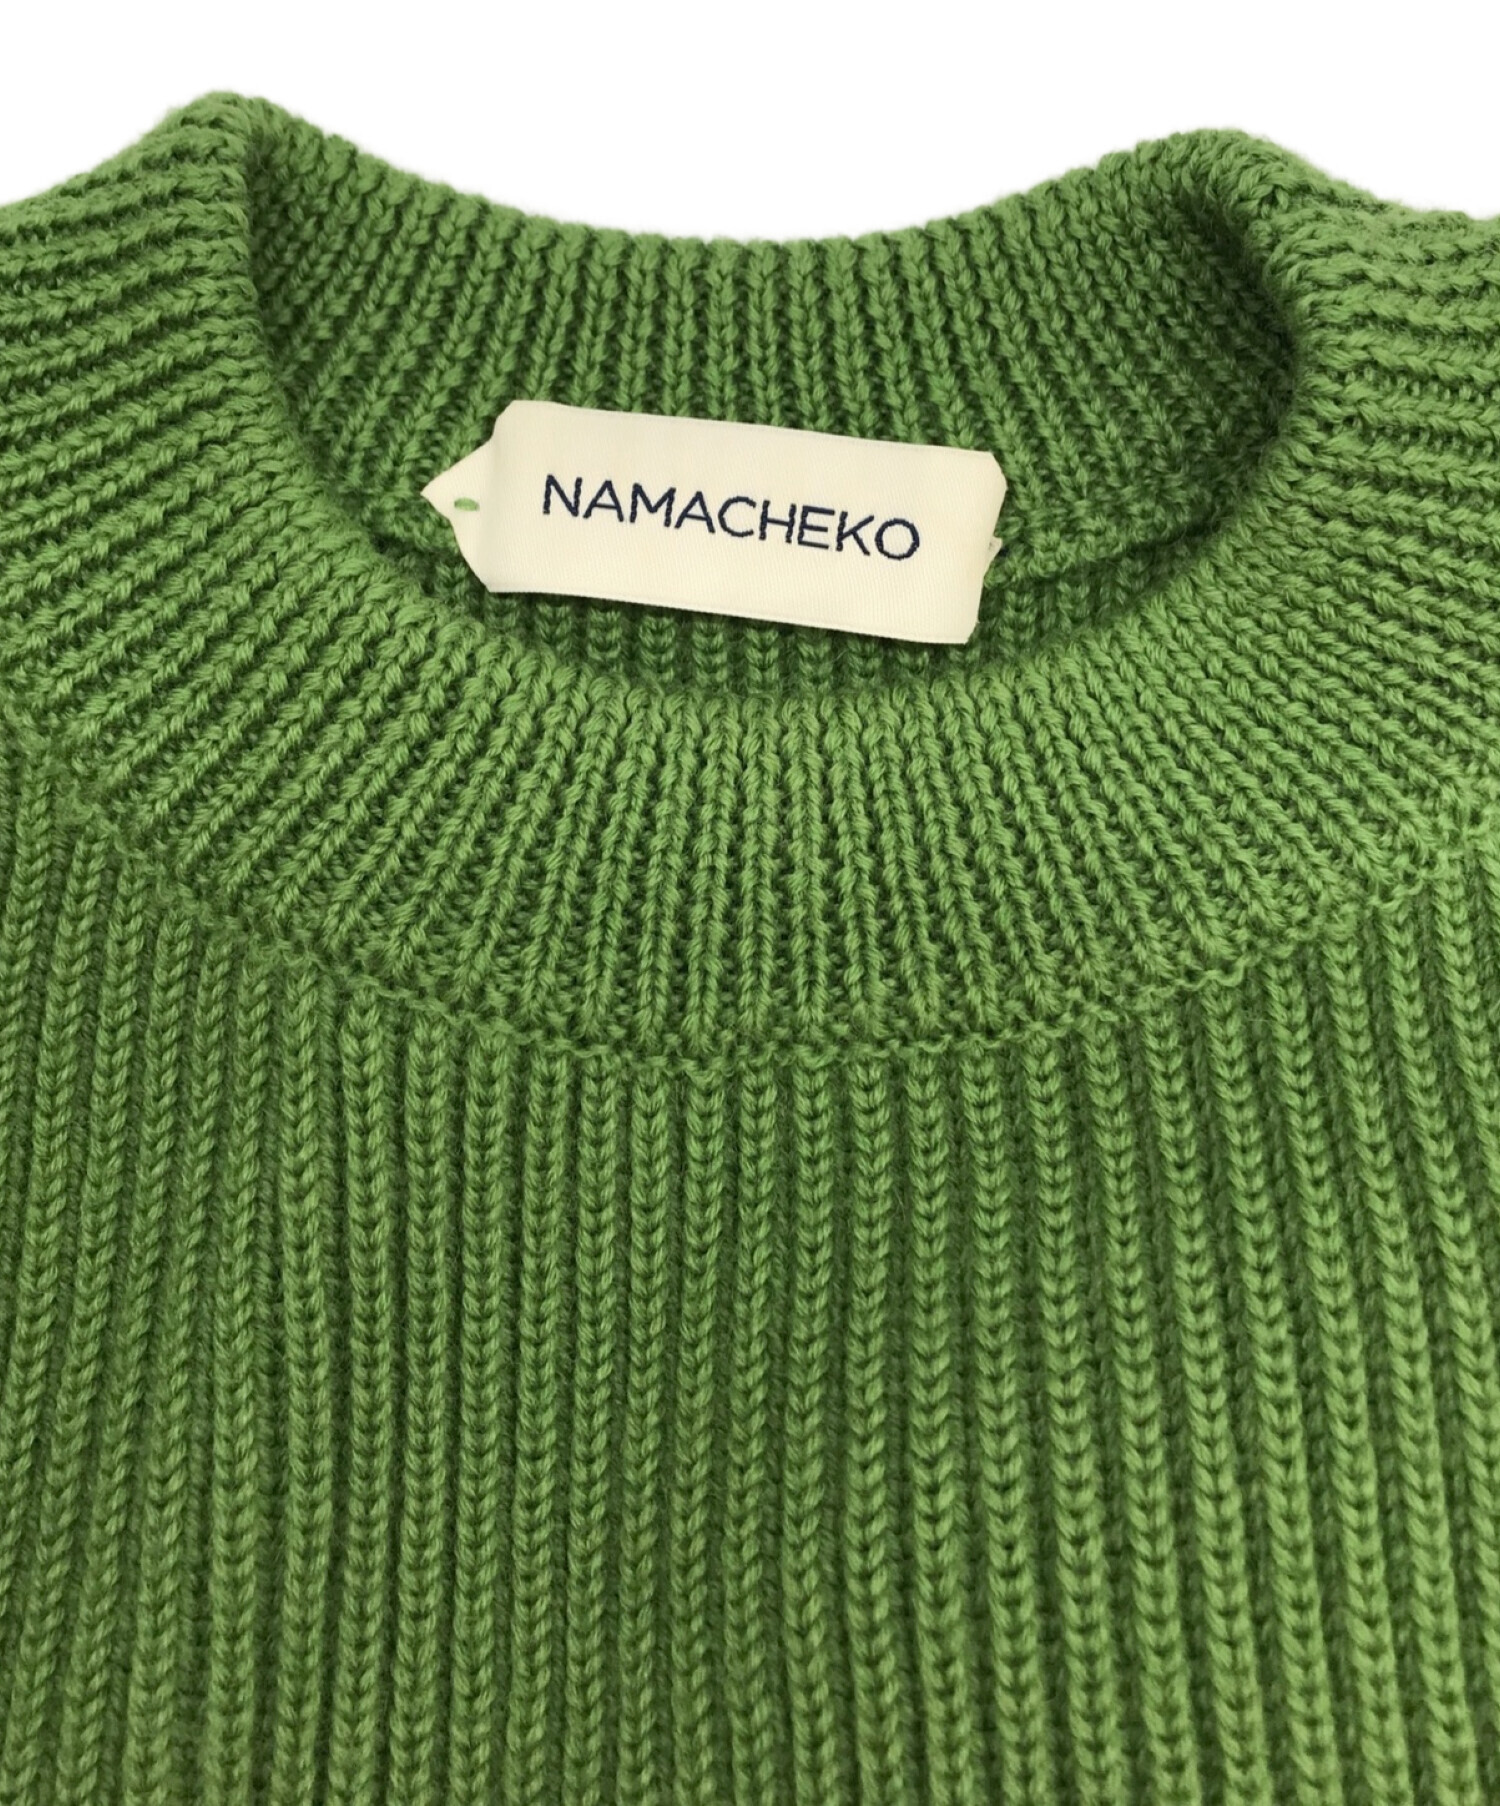 NAMACHEKO (ナマチェコ) クルーネックニット グリーン サイズ:S